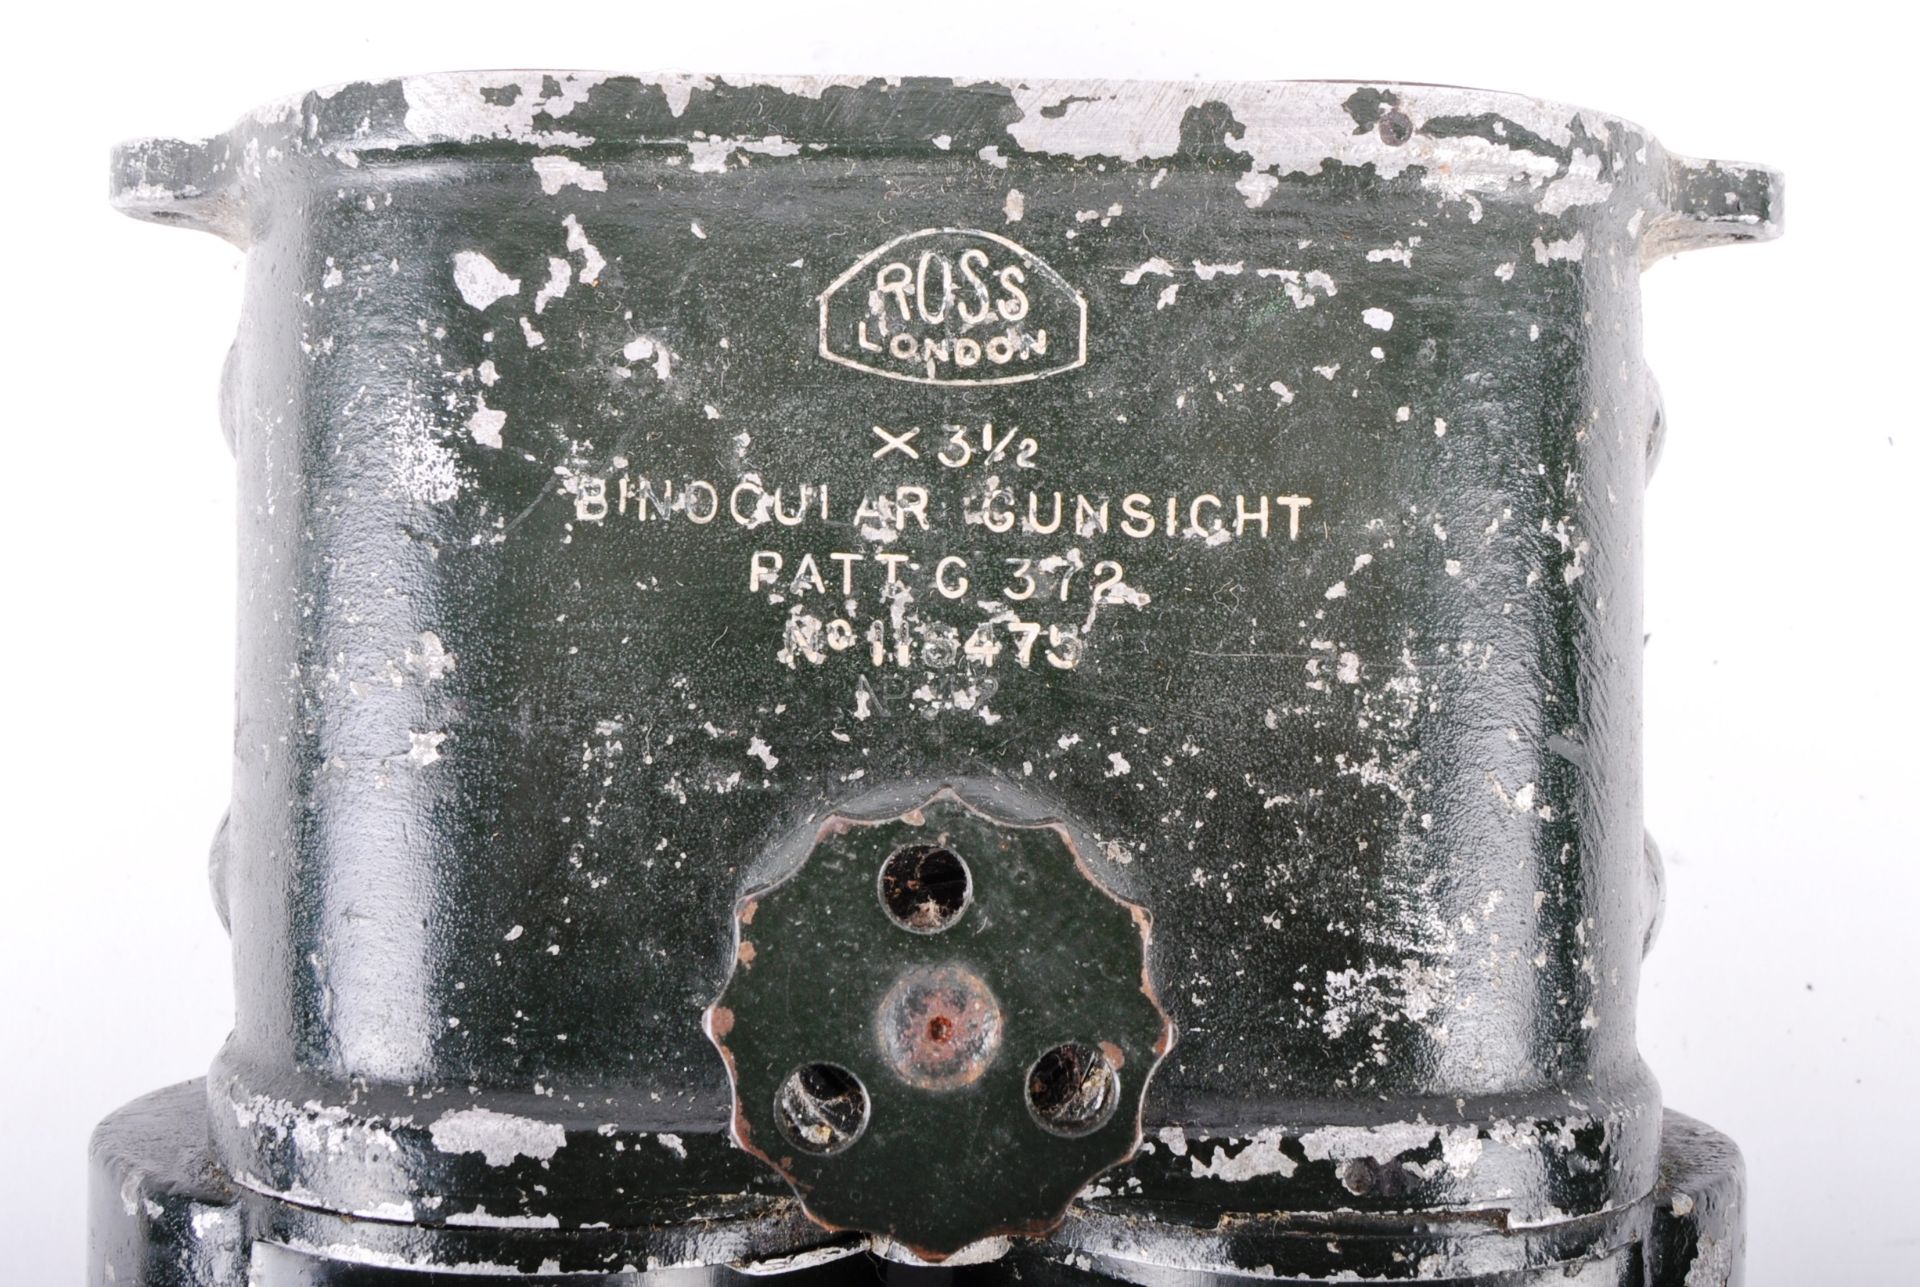 ROSS AR BINOCULAR GUNSIGHT x 31/2 PATT G 372 - Image 5 of 6